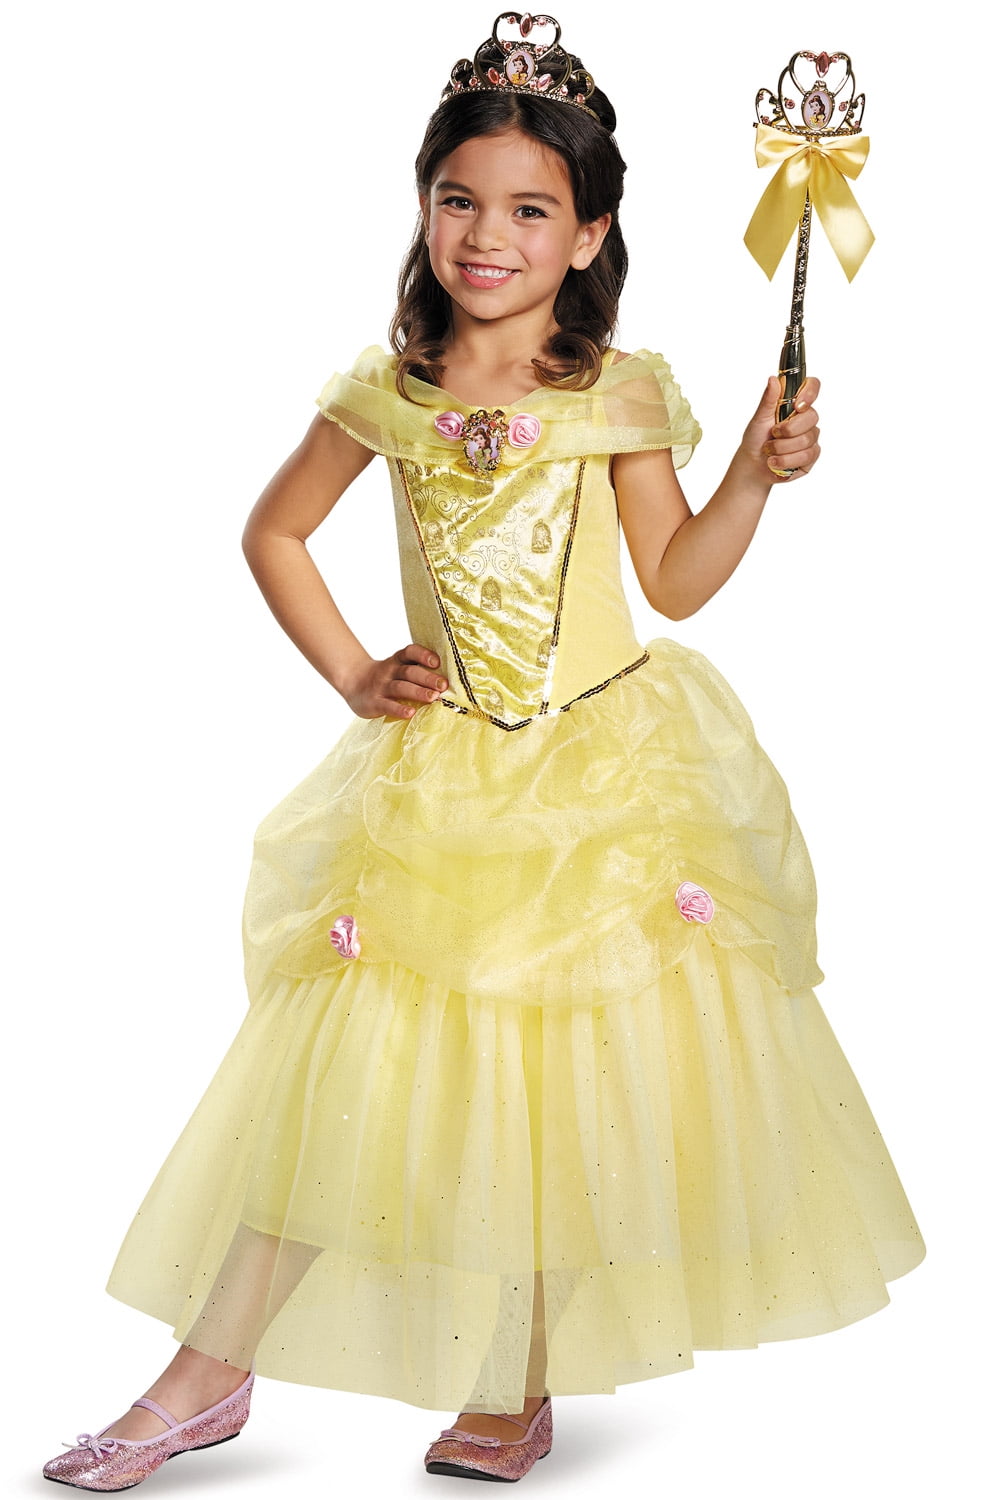 Fancy Dress Costume ~ Disney Princess Baby Belle Age 3-24 Months 